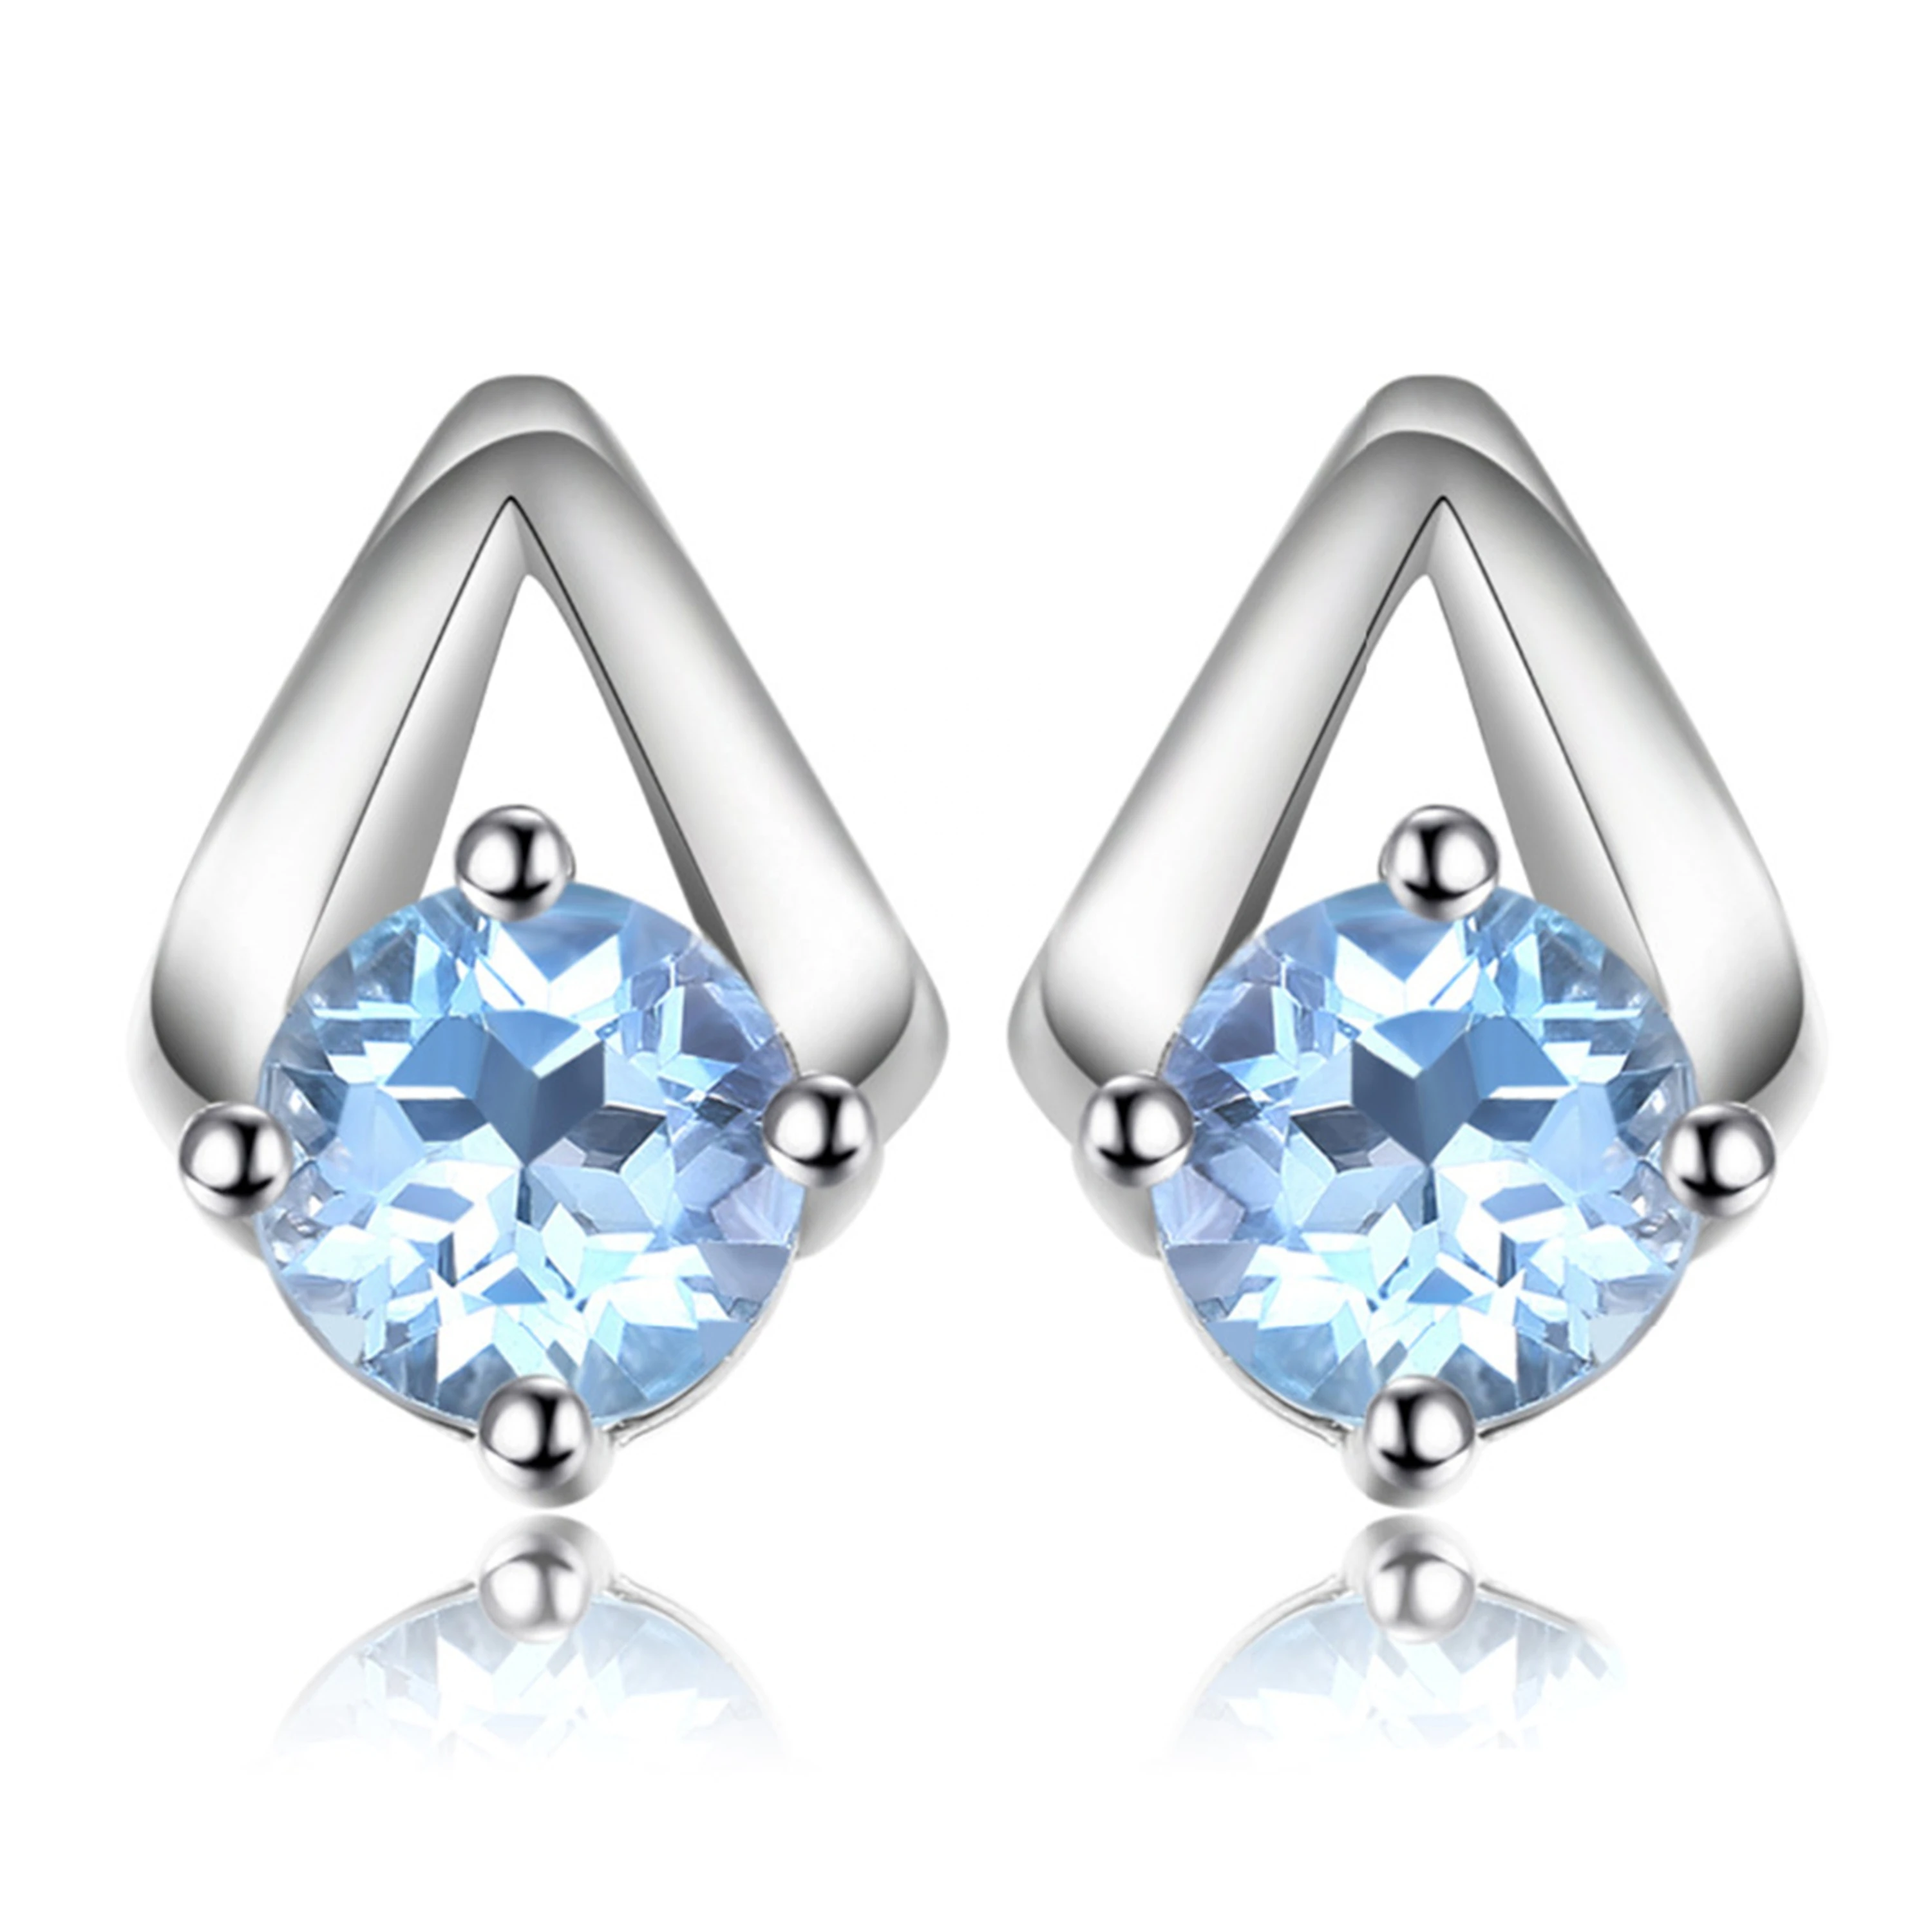 925 Sterling Silver Elegant Design Round Cut Sky Blue Topaz Earrings